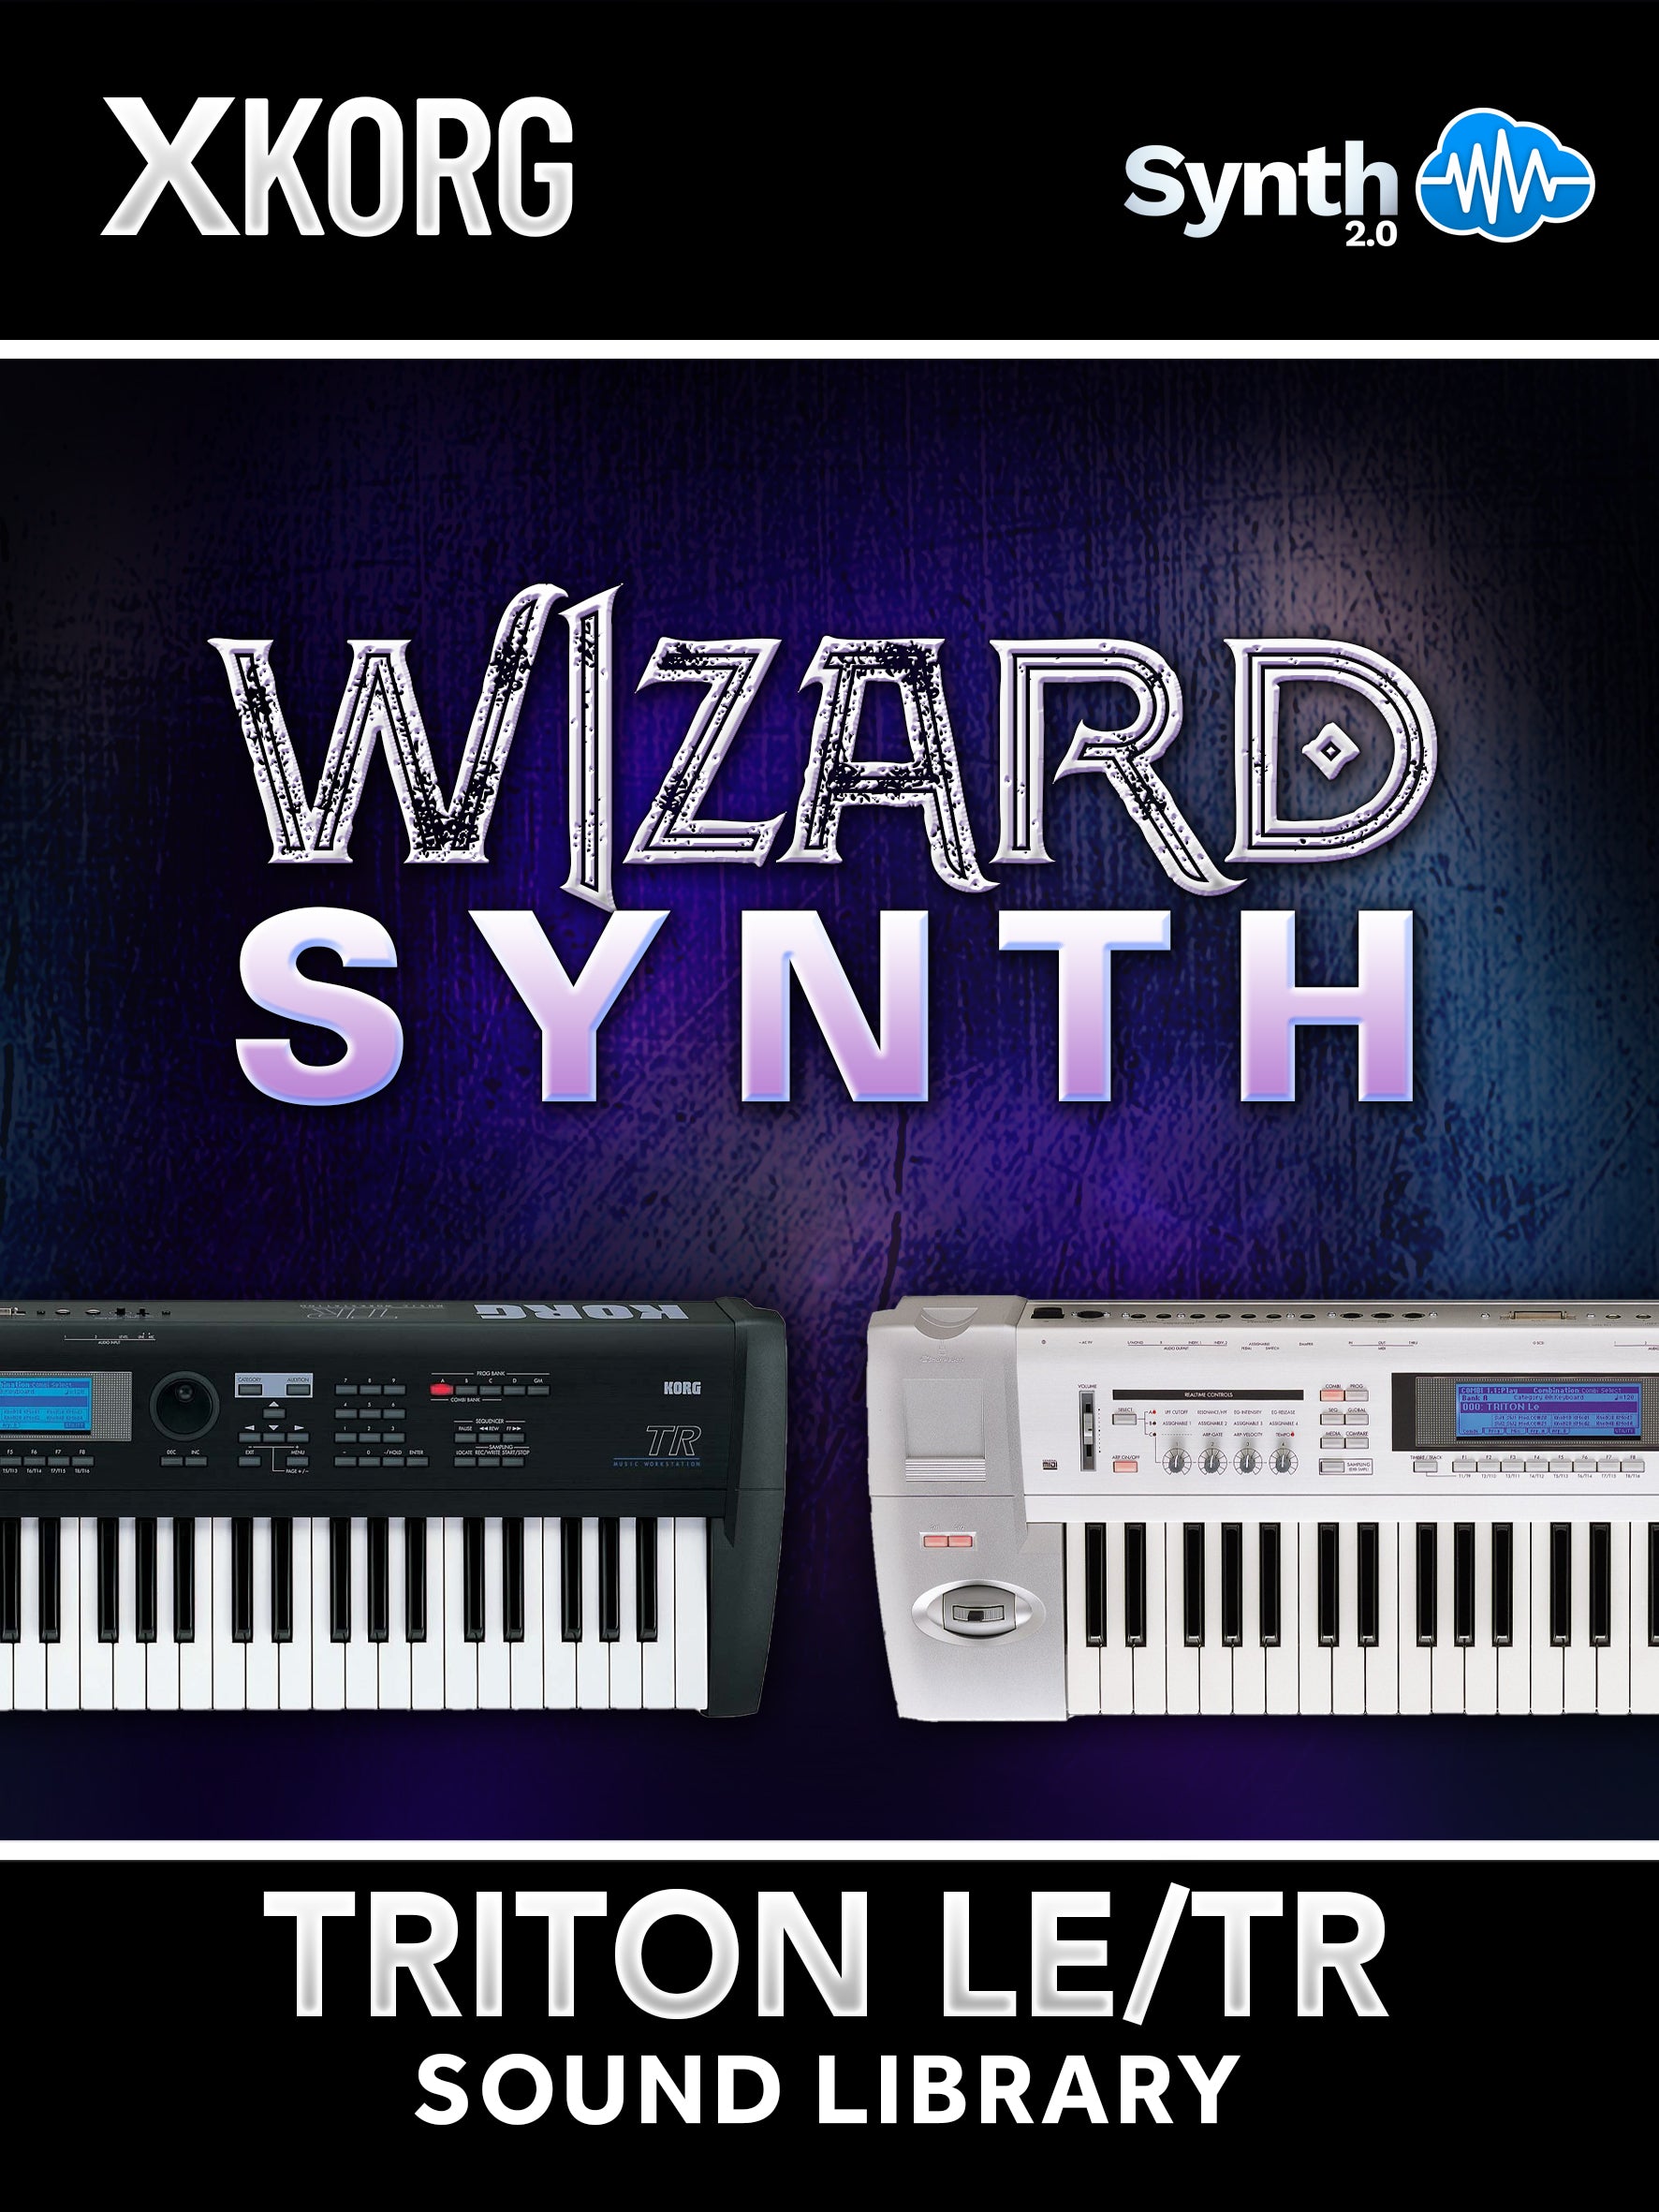 SSX103 - Wizard Synth - Korg Triton LE / TR ( 18 presets )